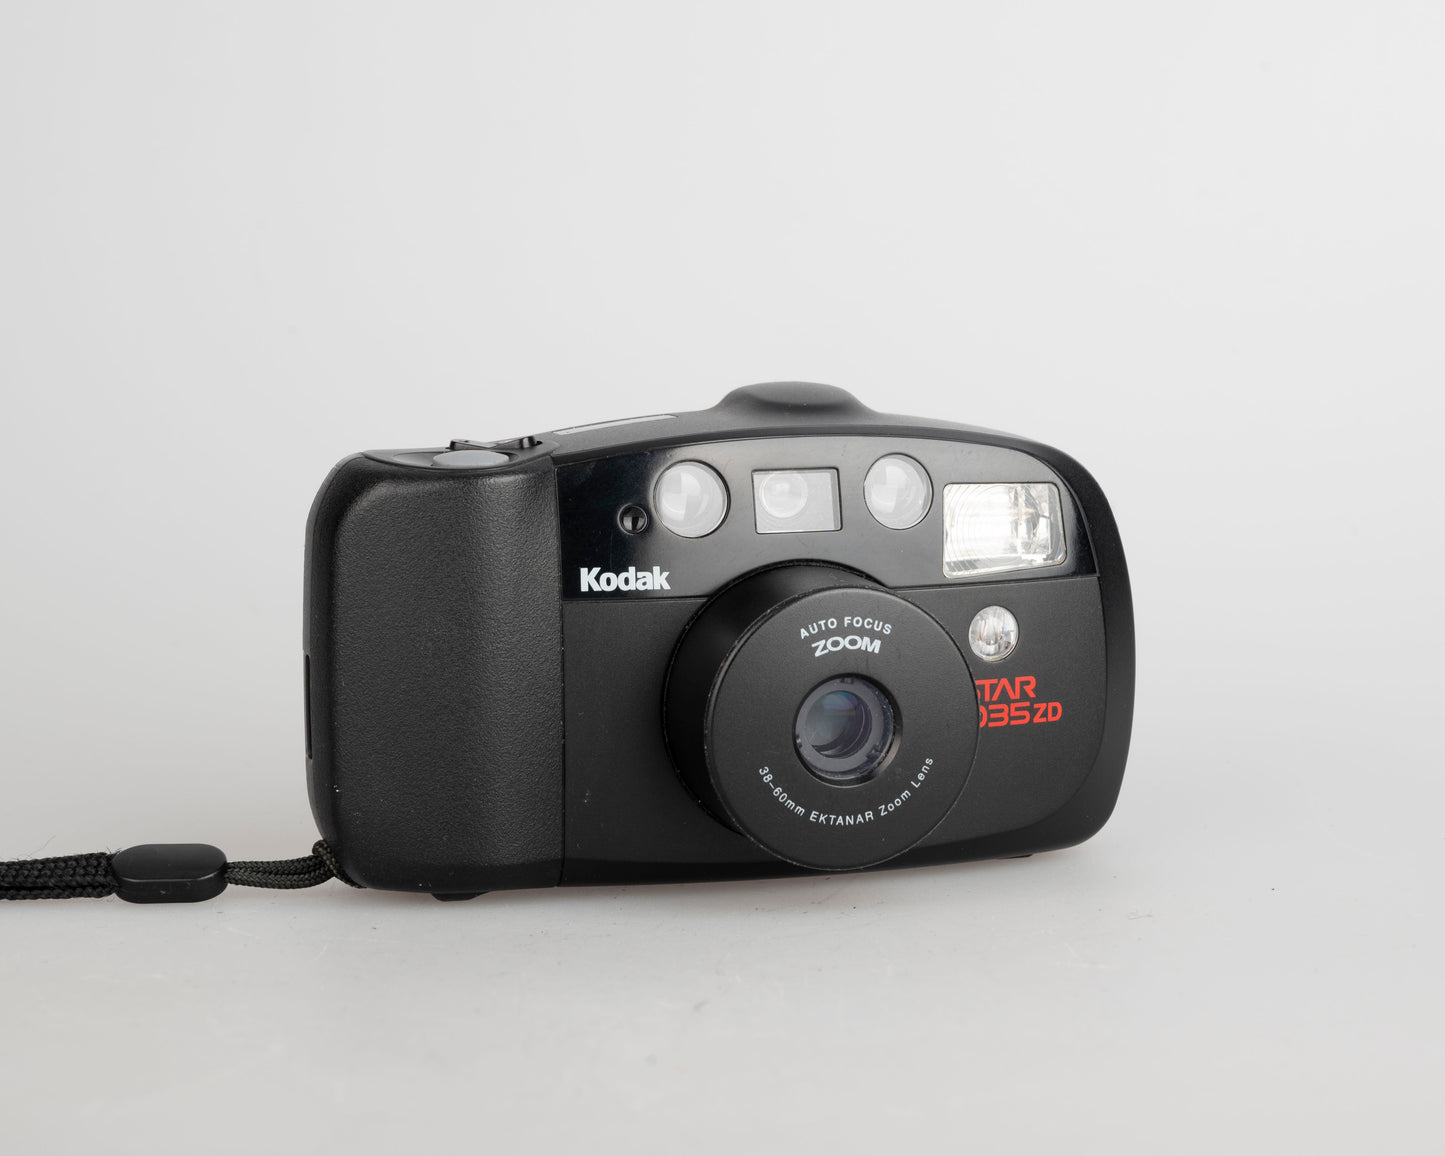 Kodak Star 1035ZD 35mm camera